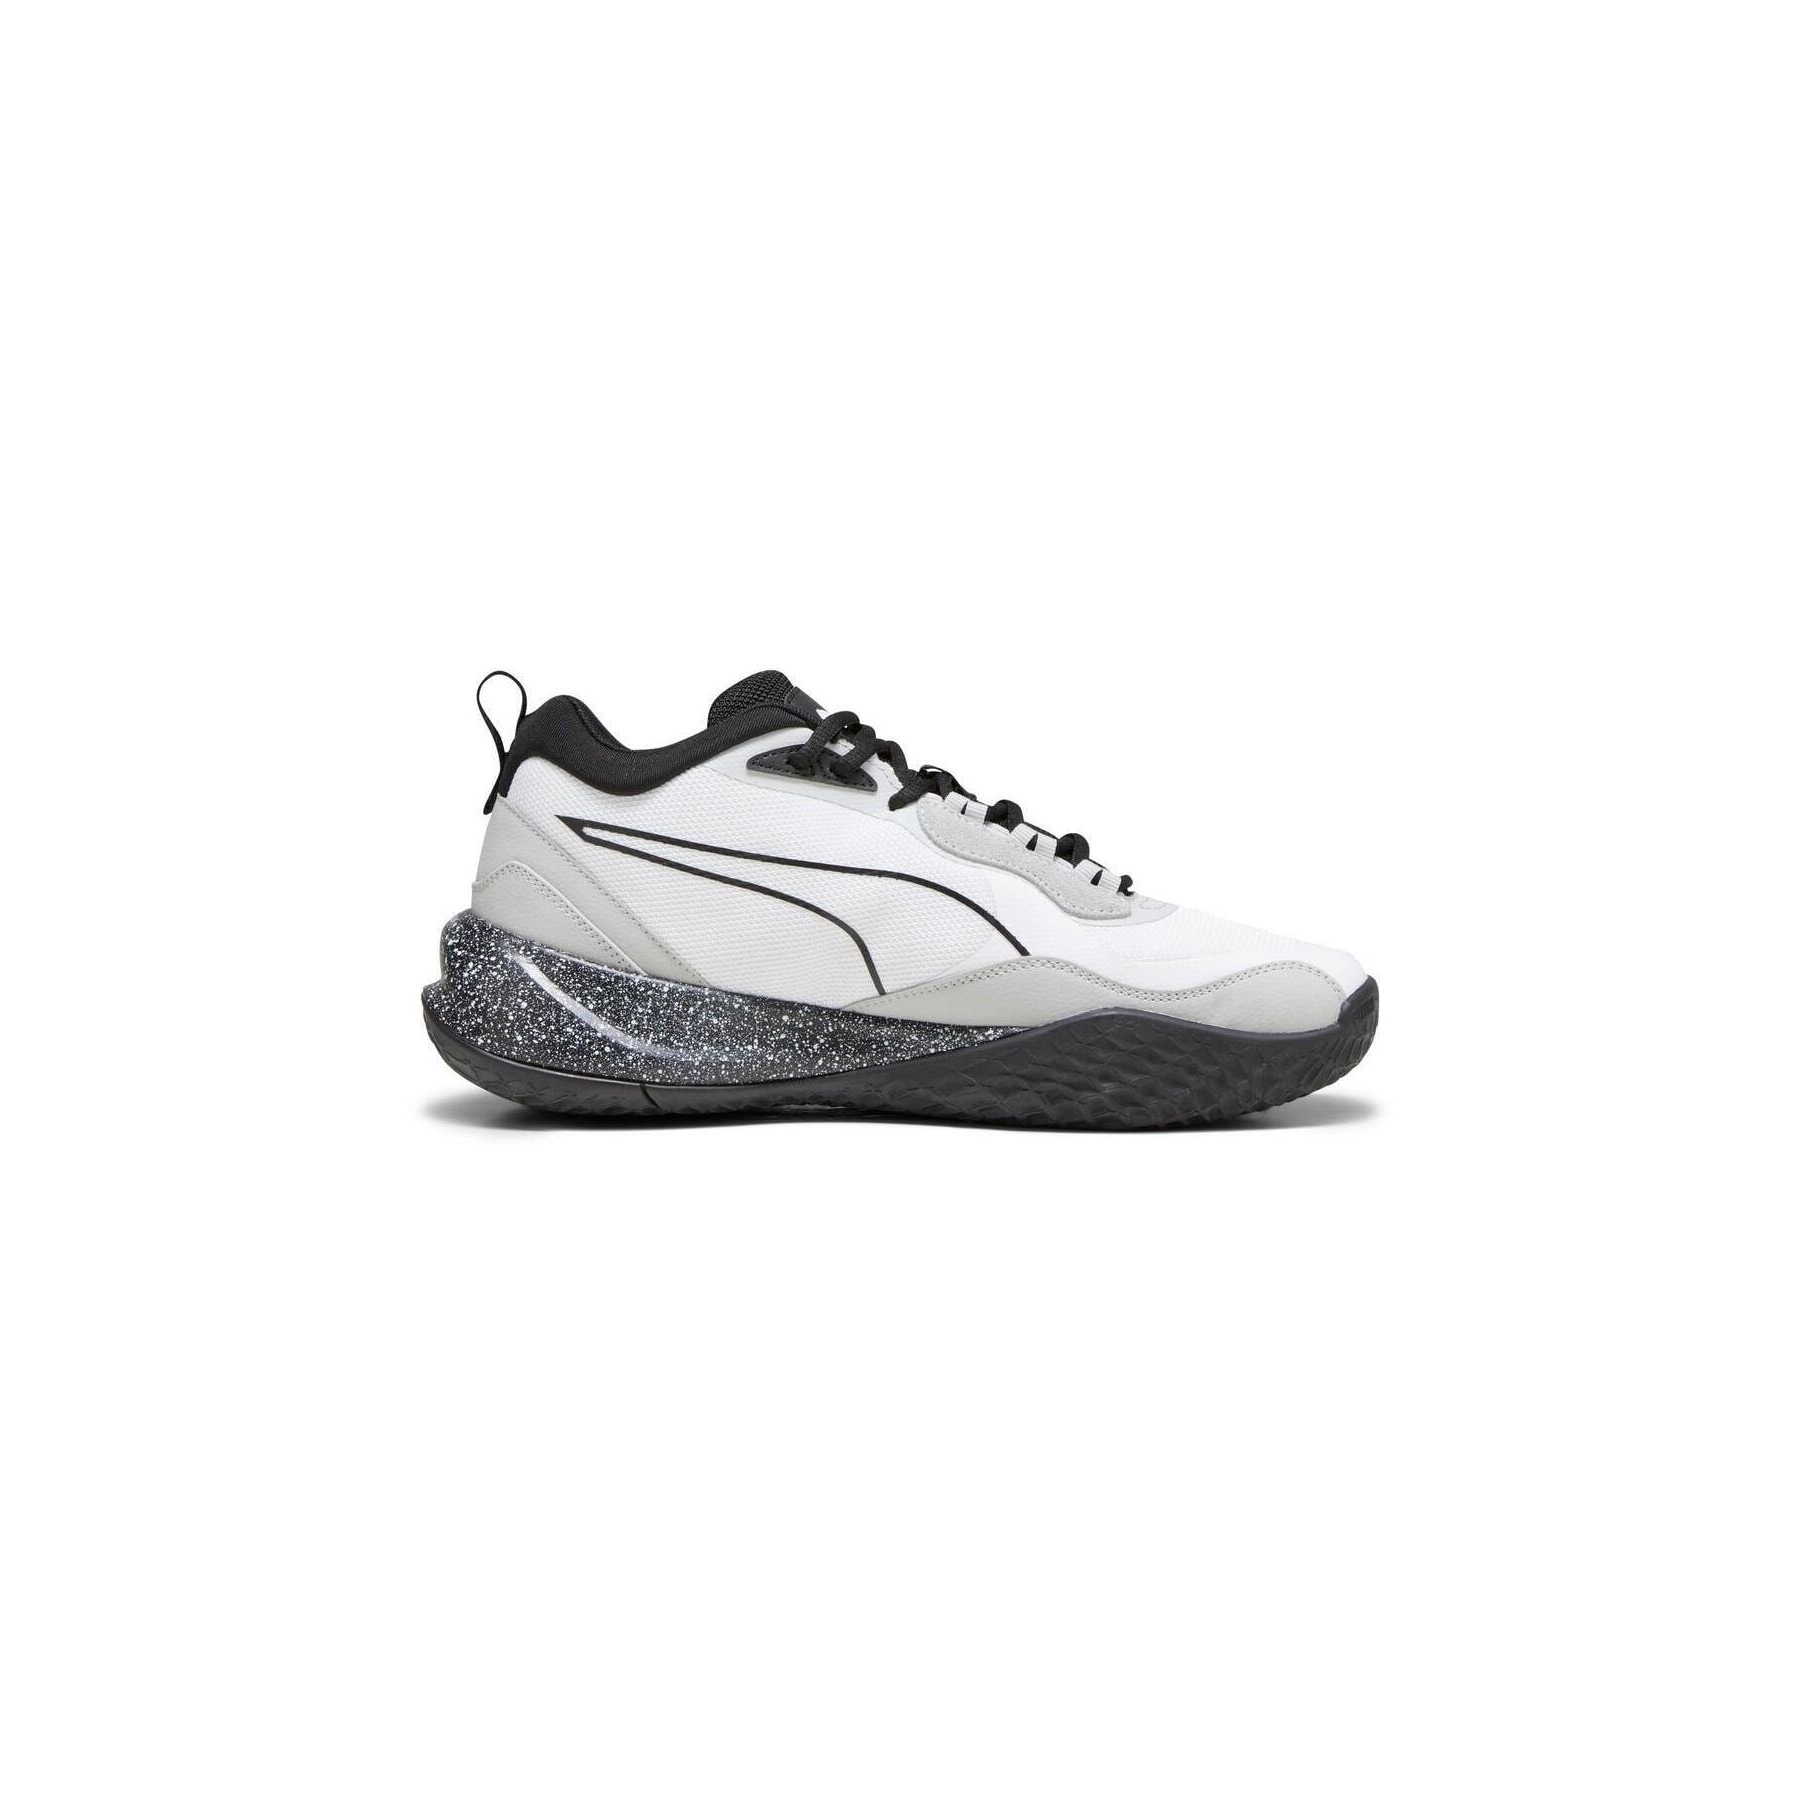 Puma Playmaker Pro Splatter Beyaz Spor Ayakkabı (377576-06)